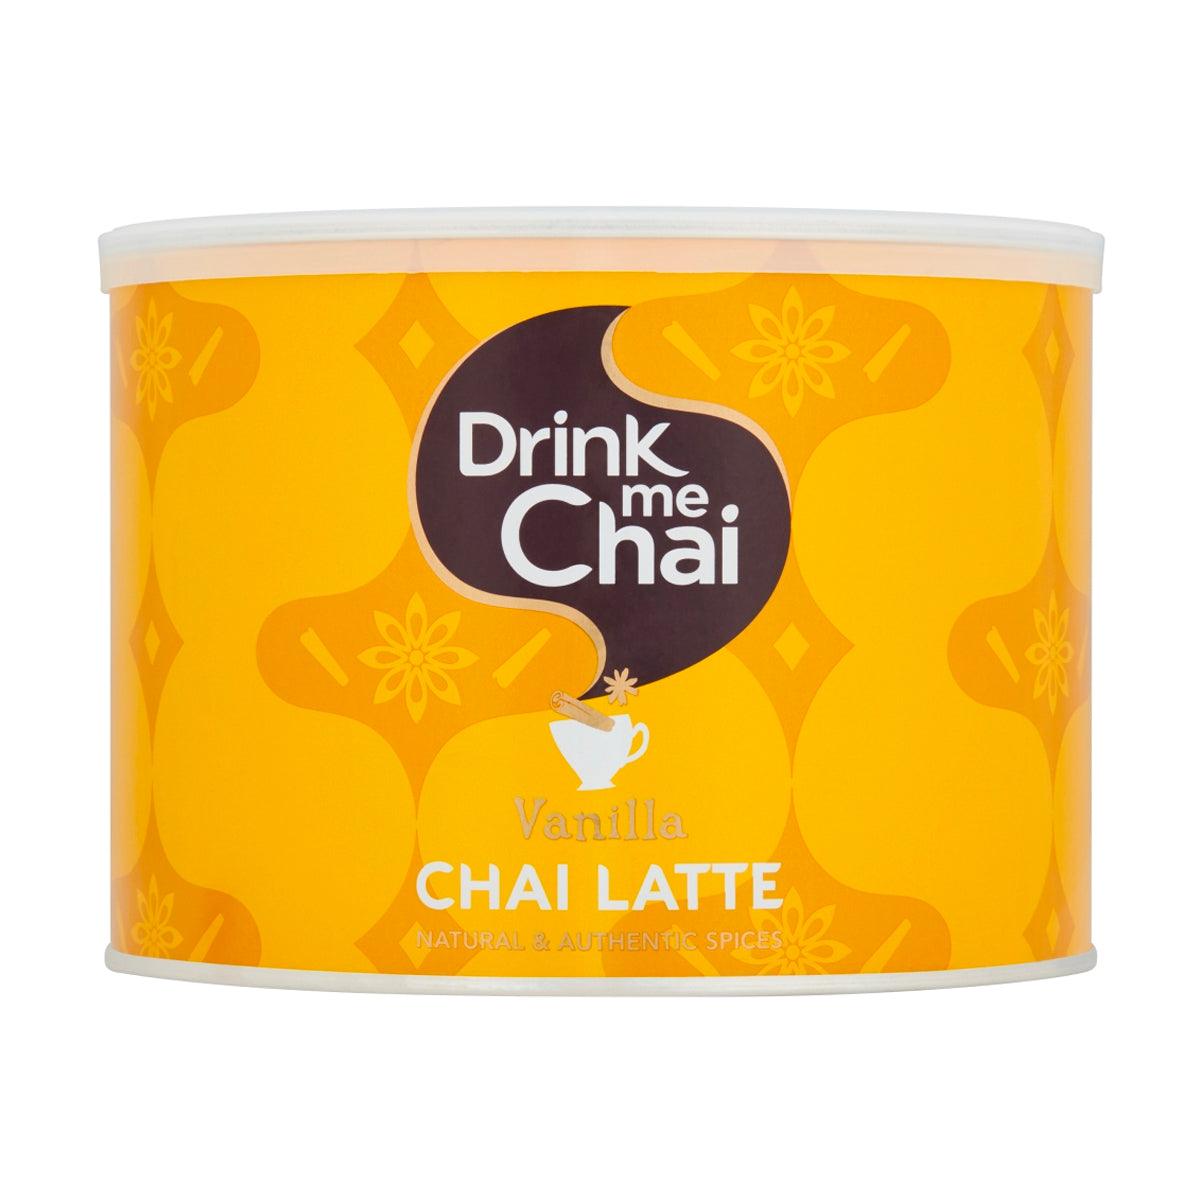 Drink Me Chai: Vanilla Chai Latte Mix - 1KG Catering Tub - Vending Superstore